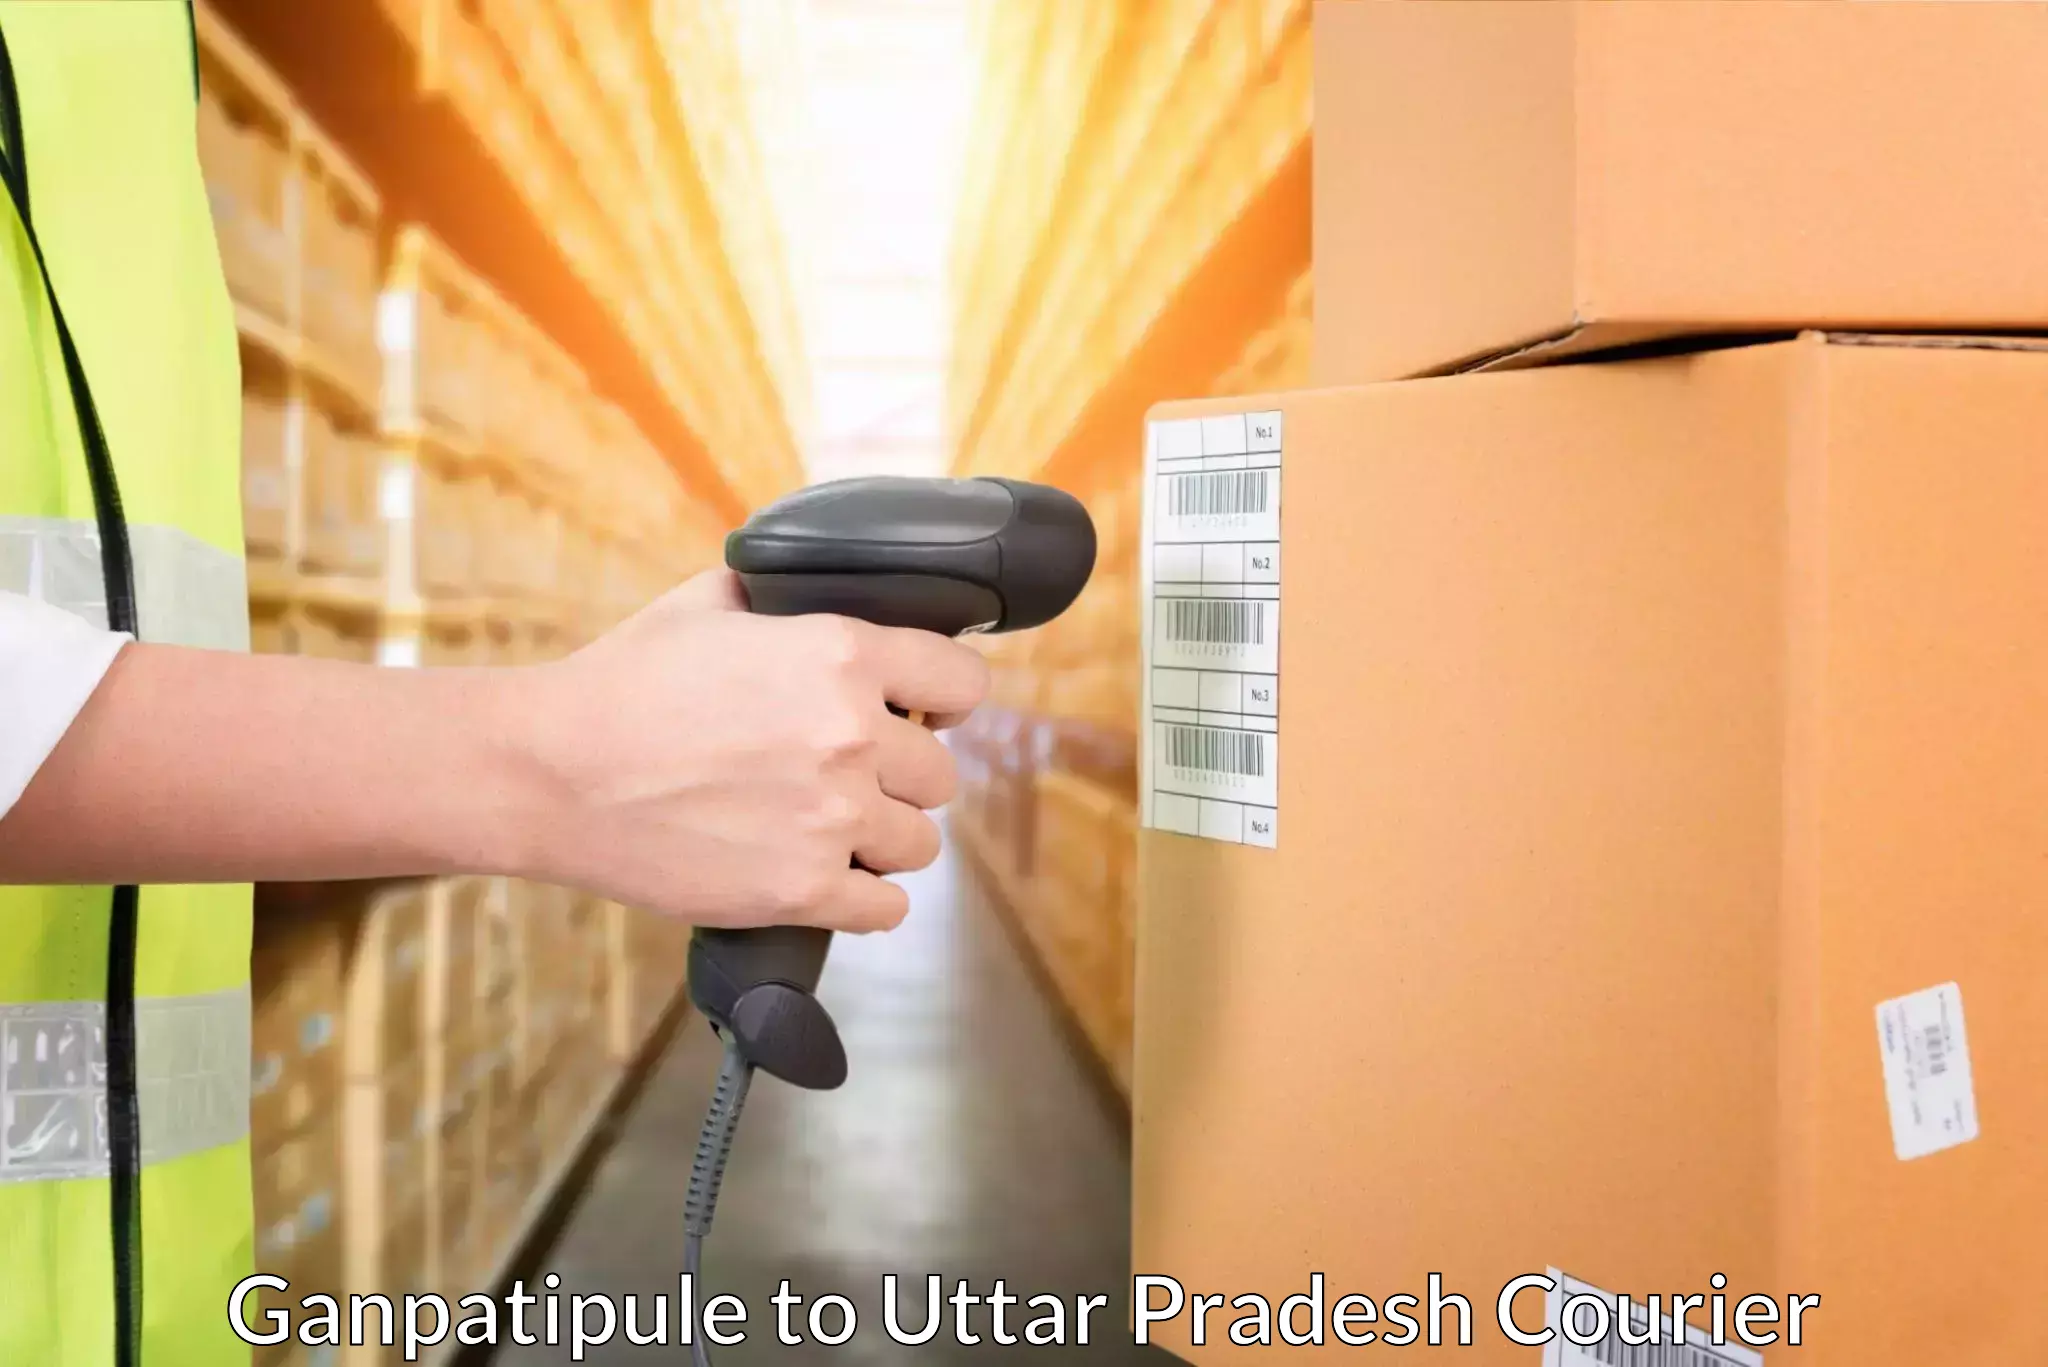 Flexible delivery scheduling Ganpatipule to Uttar Pradesh